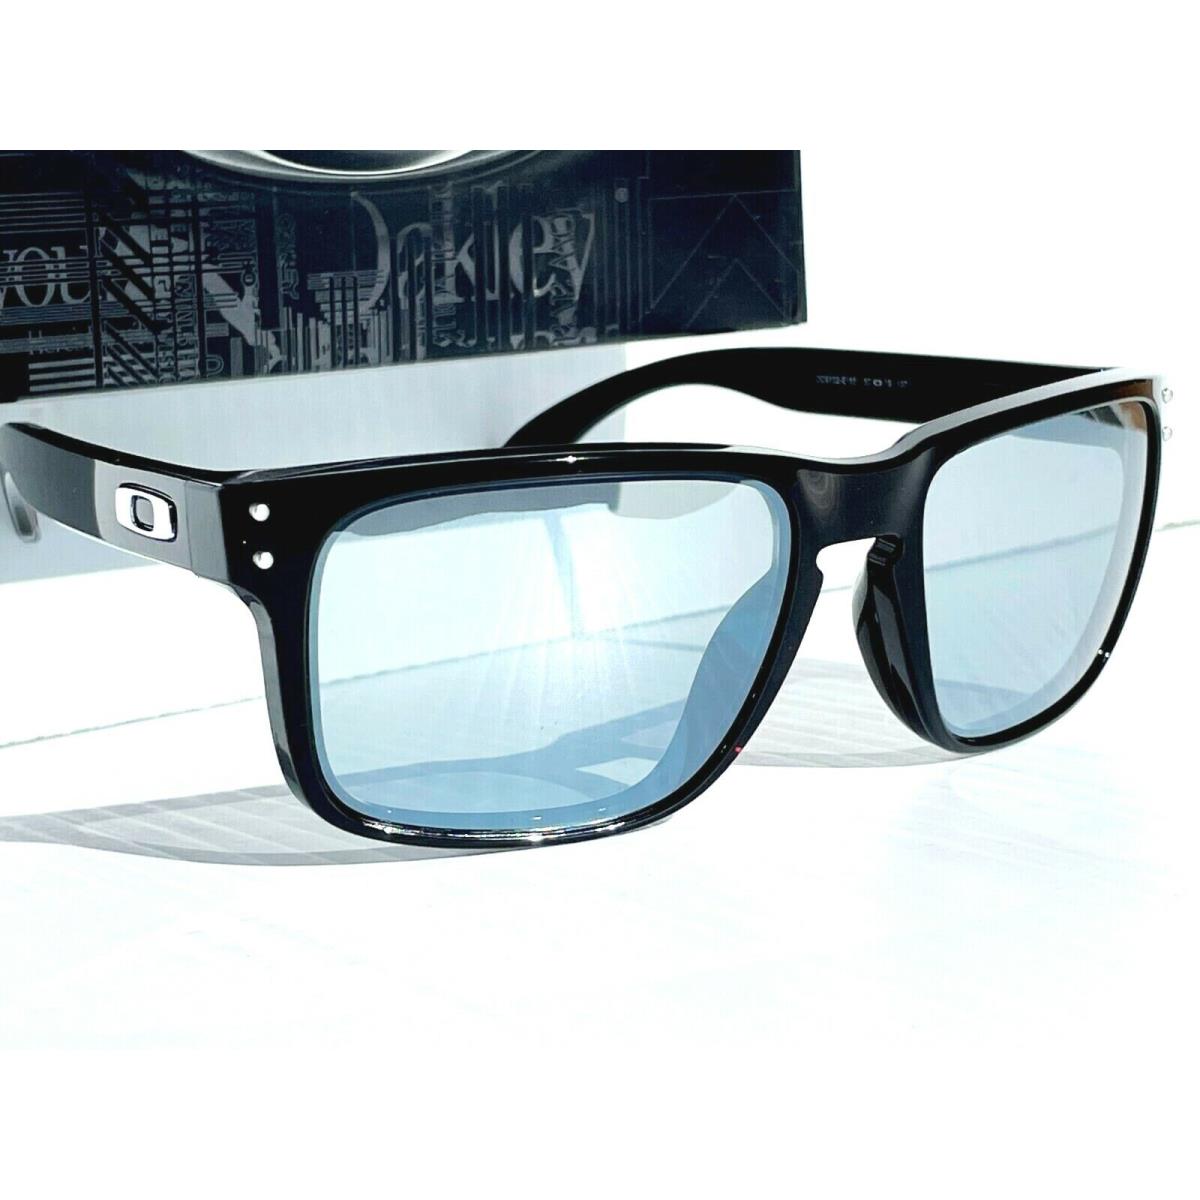 Oakley Holbrook Polished Black Galaxy Polarized Mirror Sunglass 9102 - Frame: Black, Lens: Silver